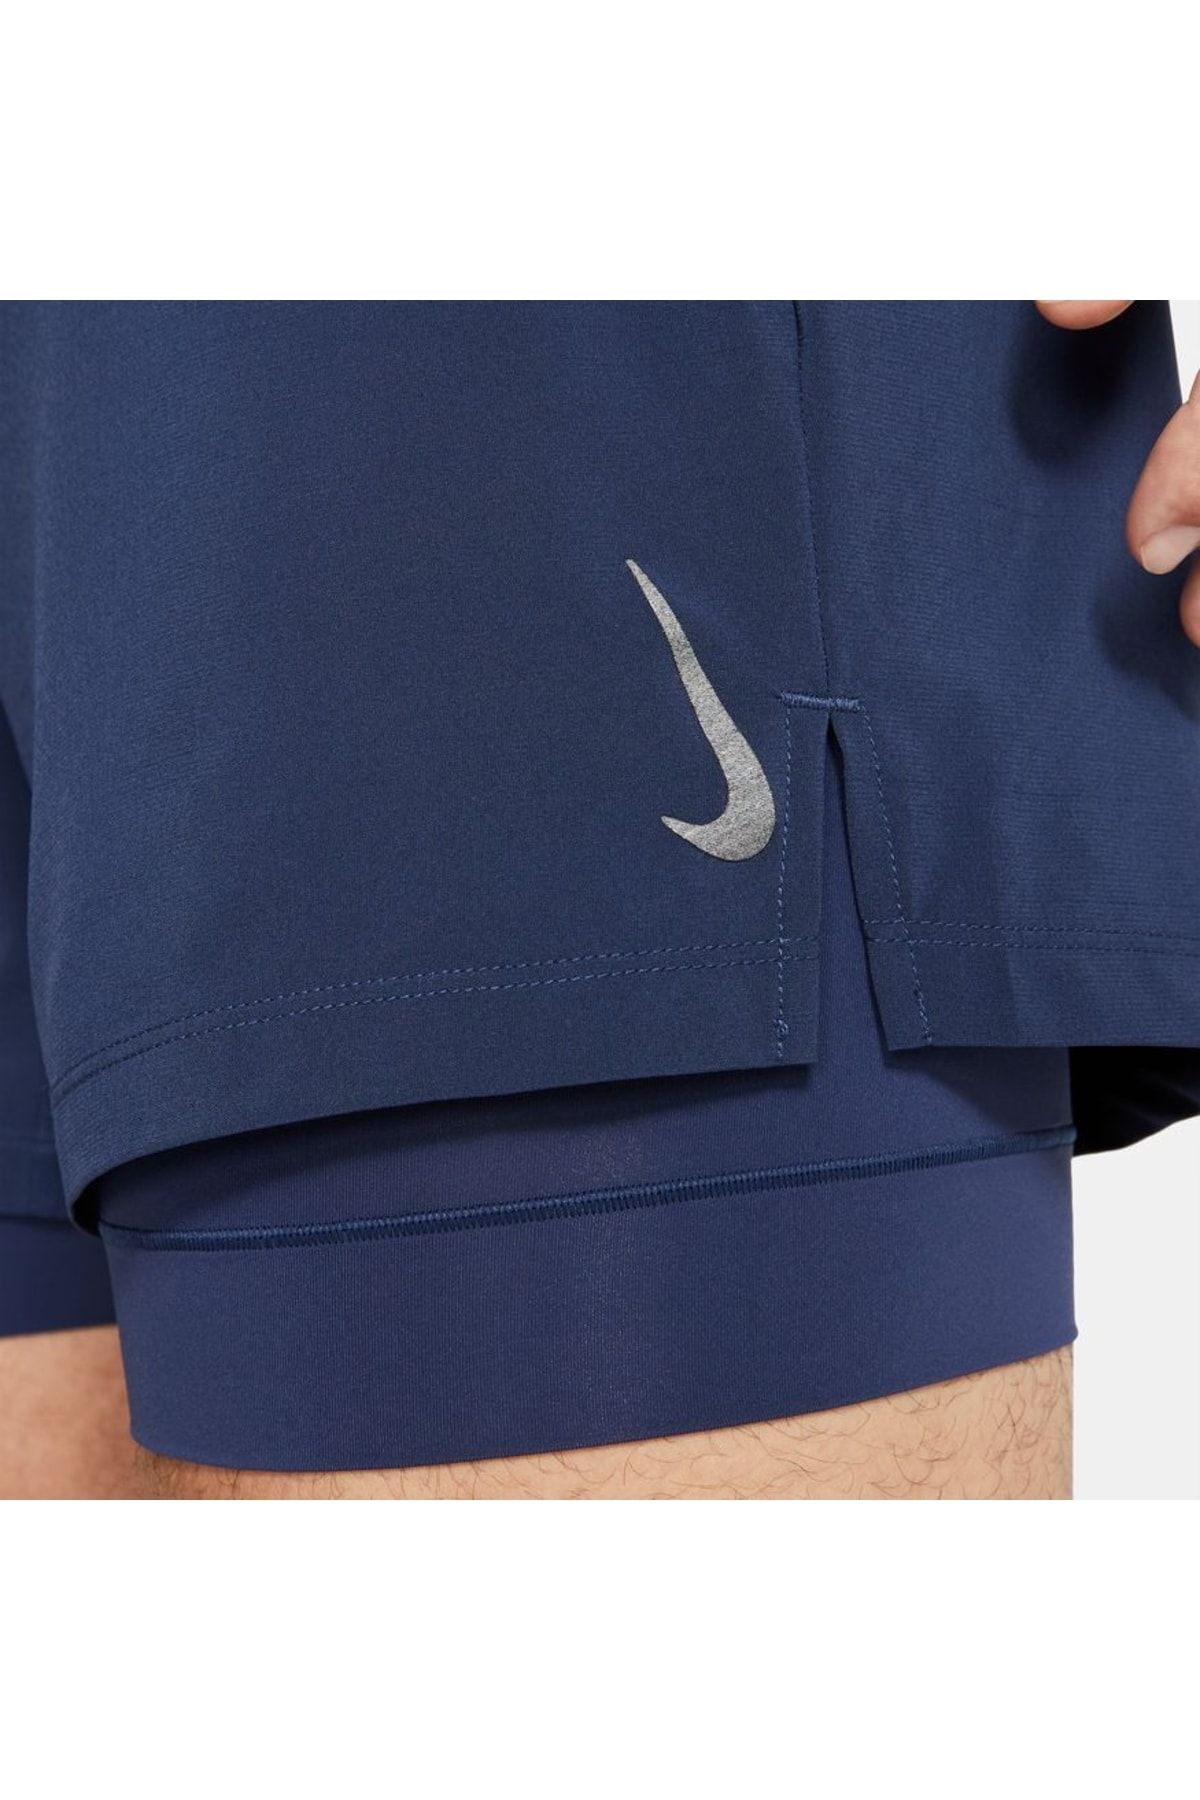 New Nike Yoga 2 in 1 Shorts Black / Blue Size Men's Large DC5320-011